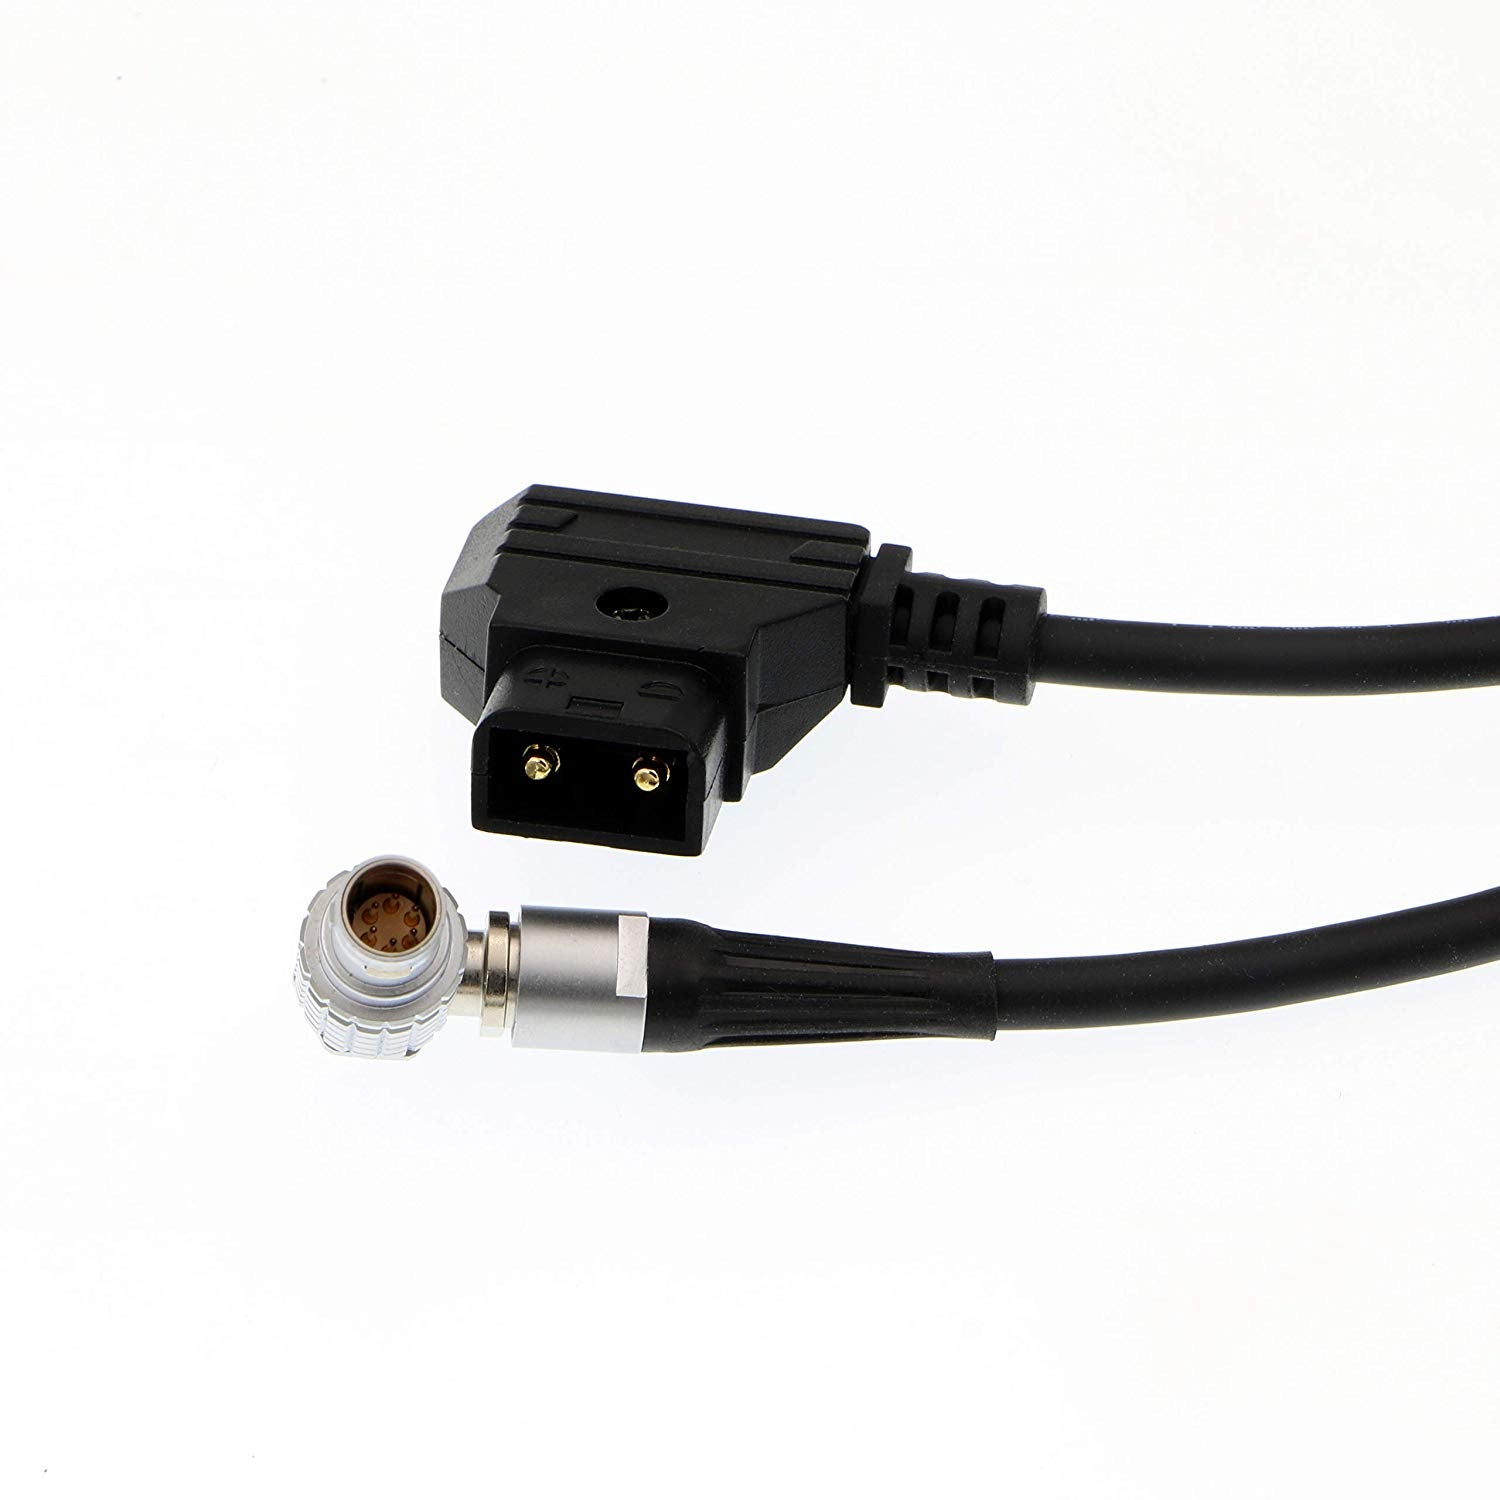 Alvin's Cables Motorstromkabel für DJI Follow Focus System, rechtwinkliger 6-poliger Stecker auf D-Tap